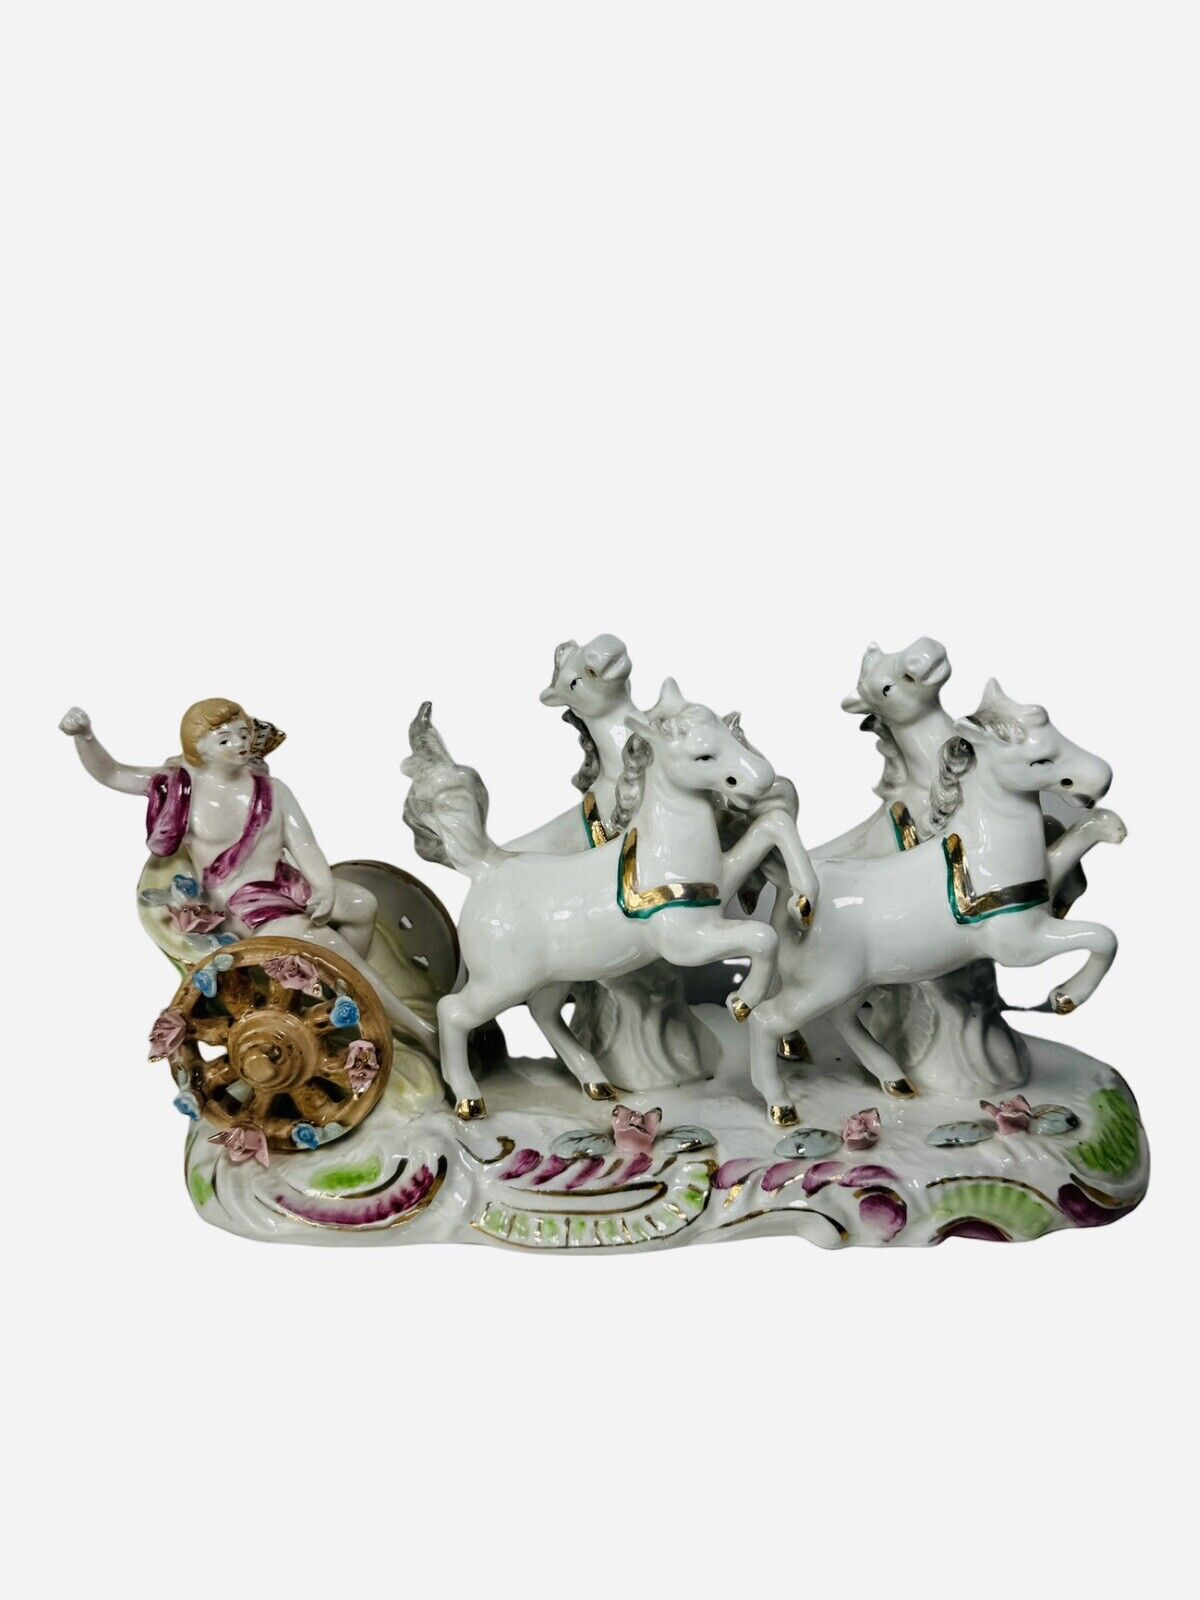 German Porcelain Chariot Horses Statue Figurine Handpainted Vintage Unbranded